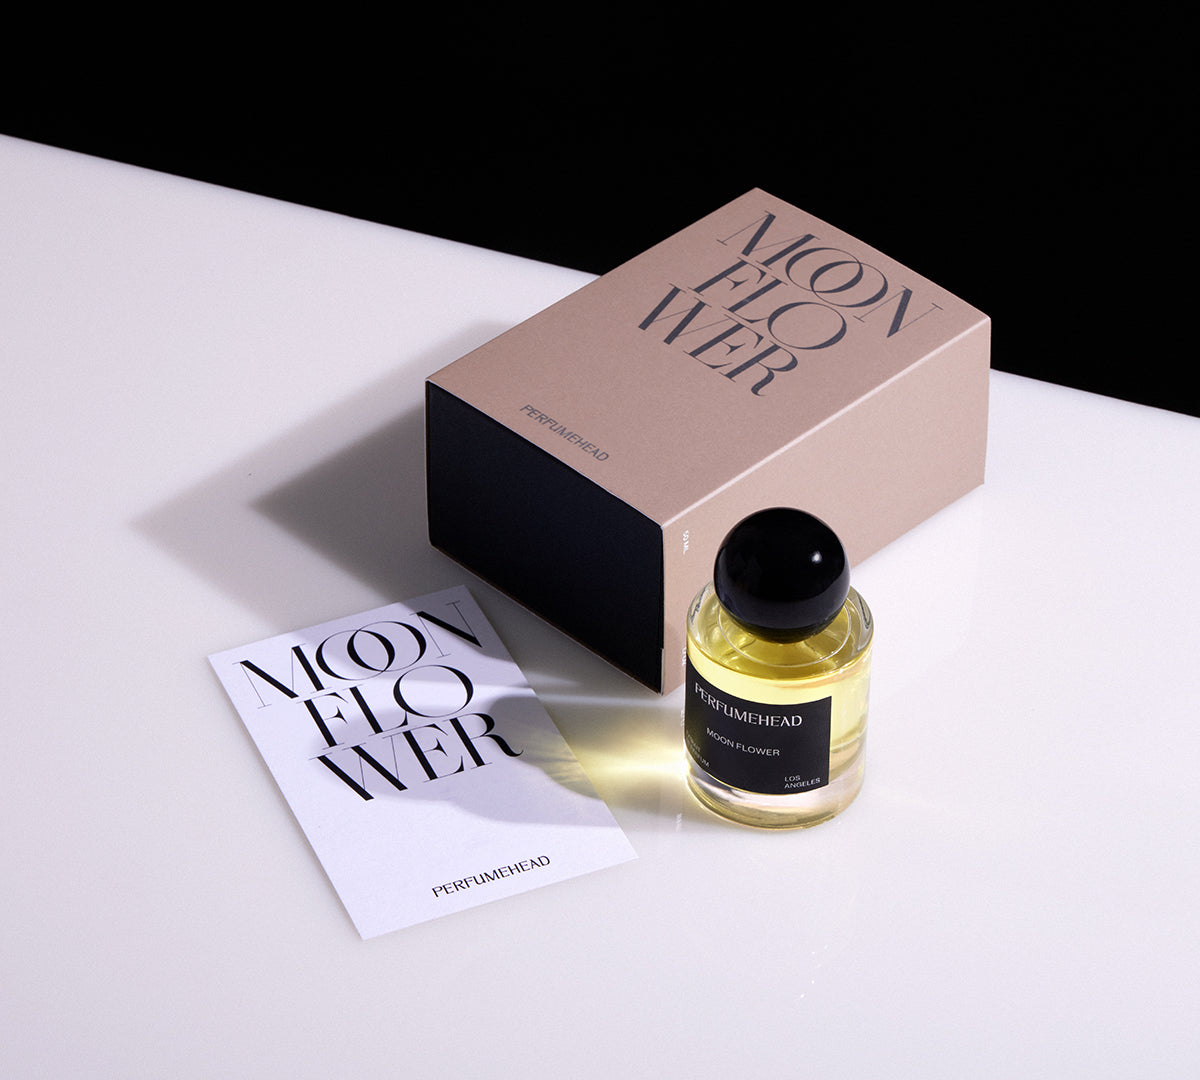 Moon Flower extrait de parfum 50ml signature spray bottle, box, and typography